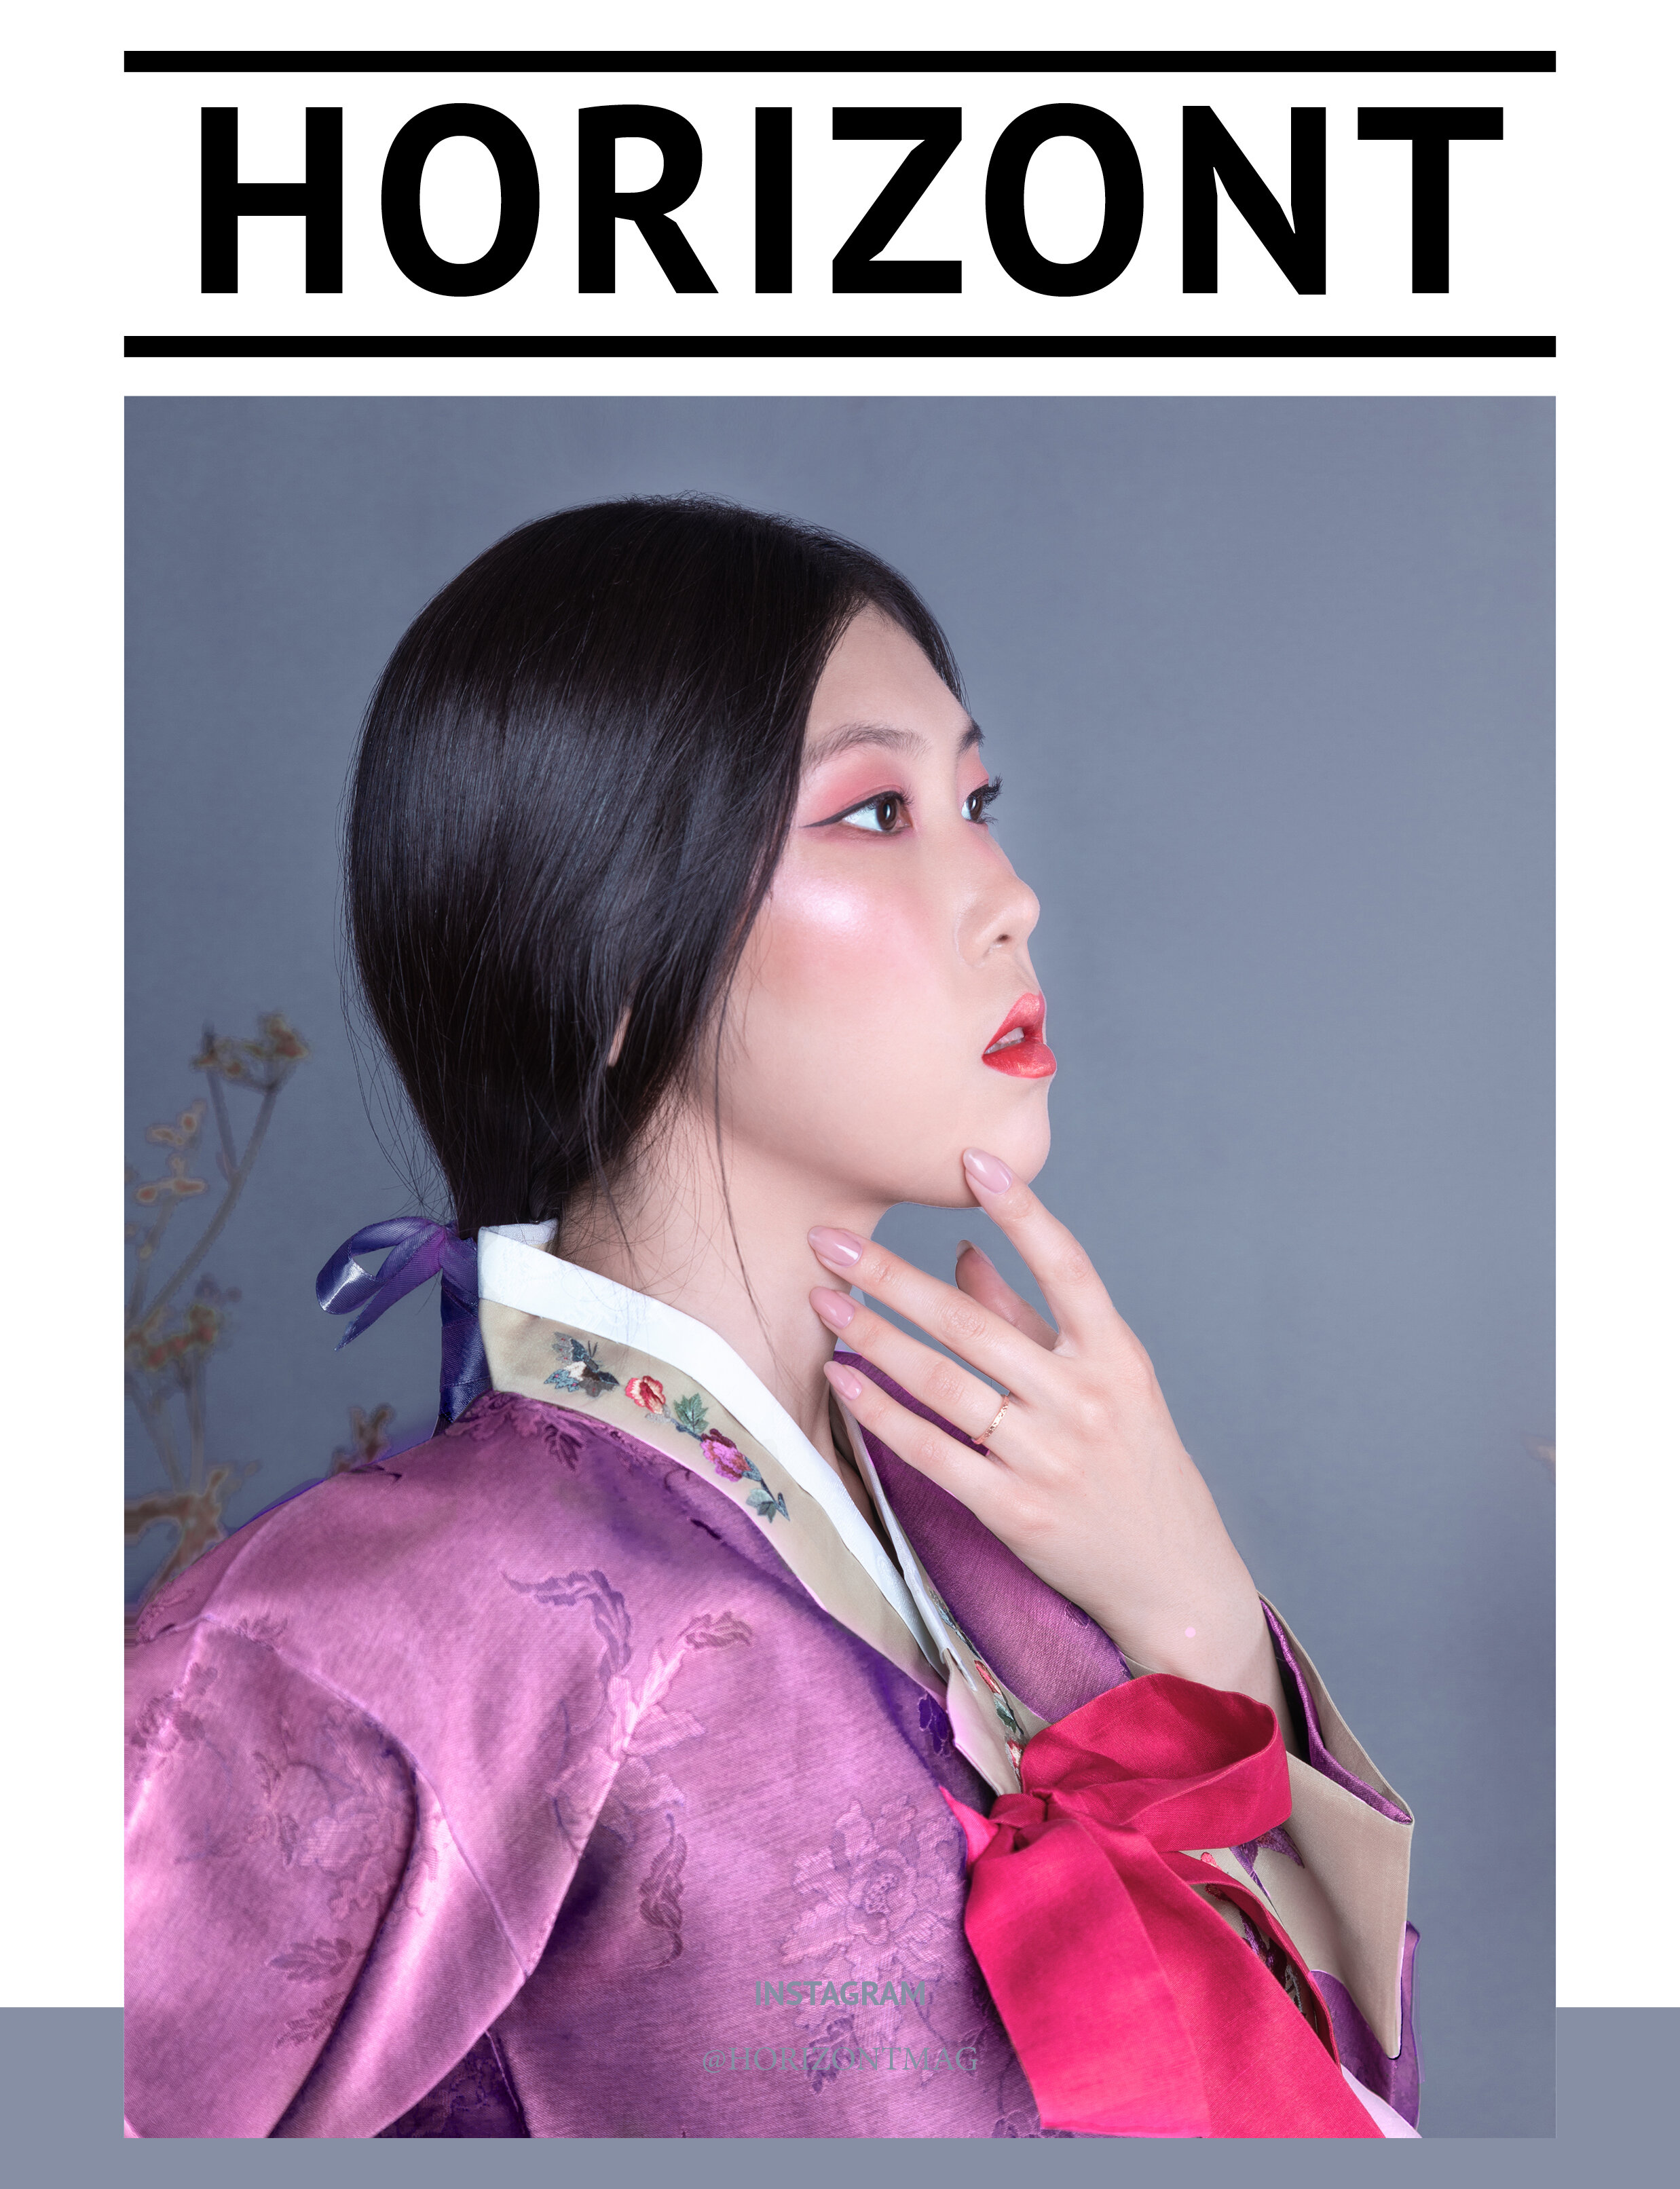 HORIZONT - Vol 14 - Oct 2020 - BACK COVER.jpg